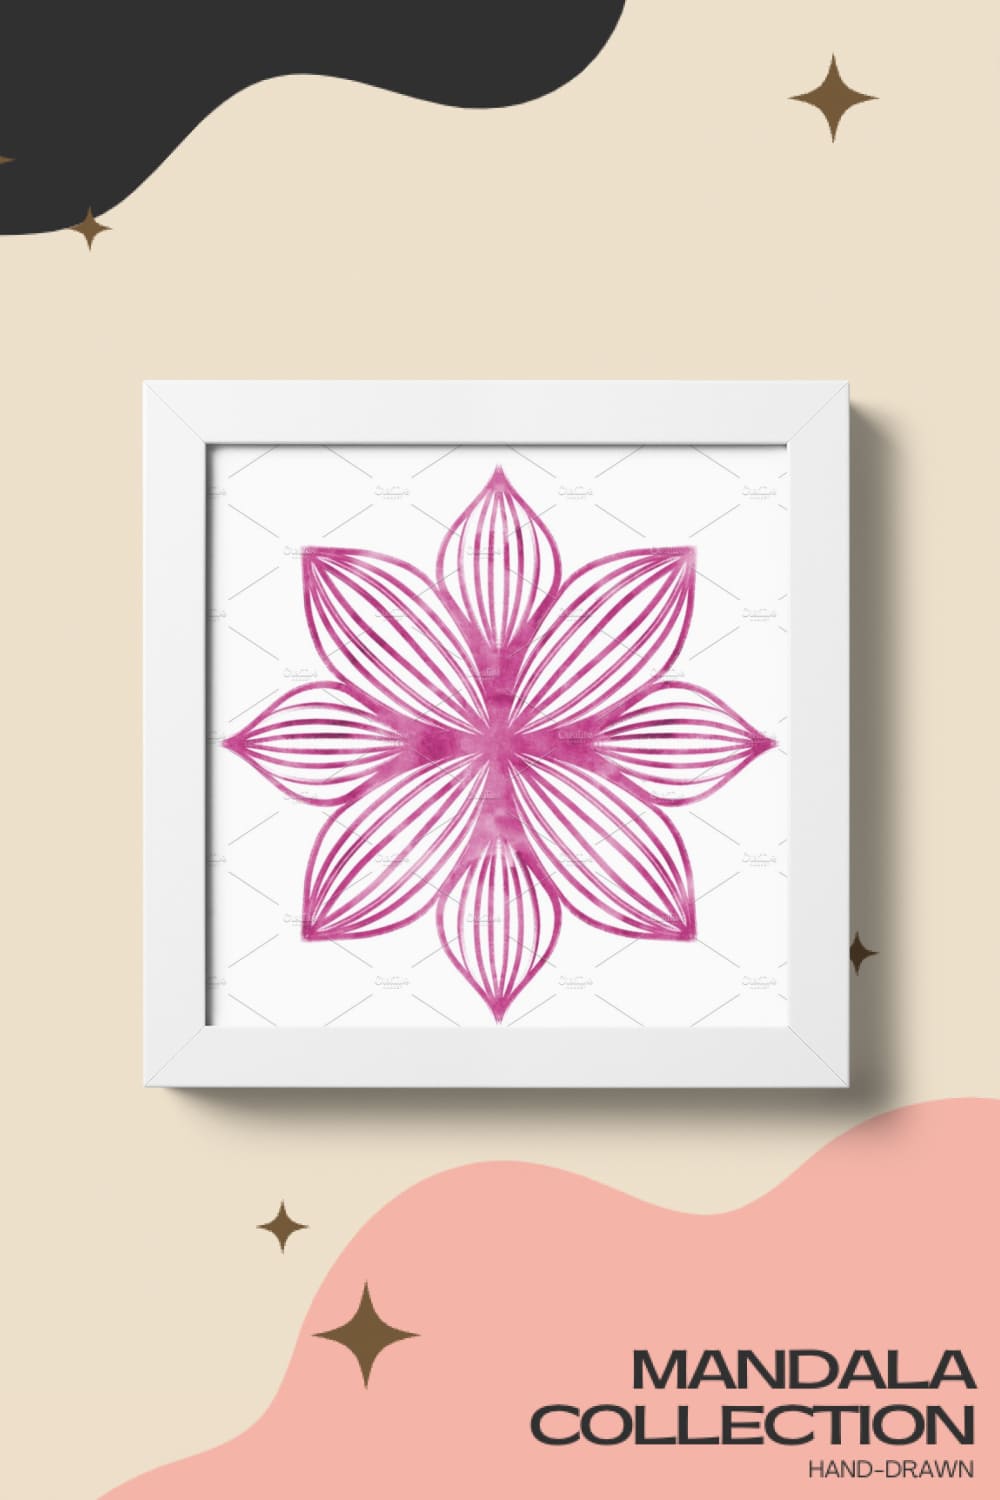 Hand-Drawn Mandala Collection - Pinterest.